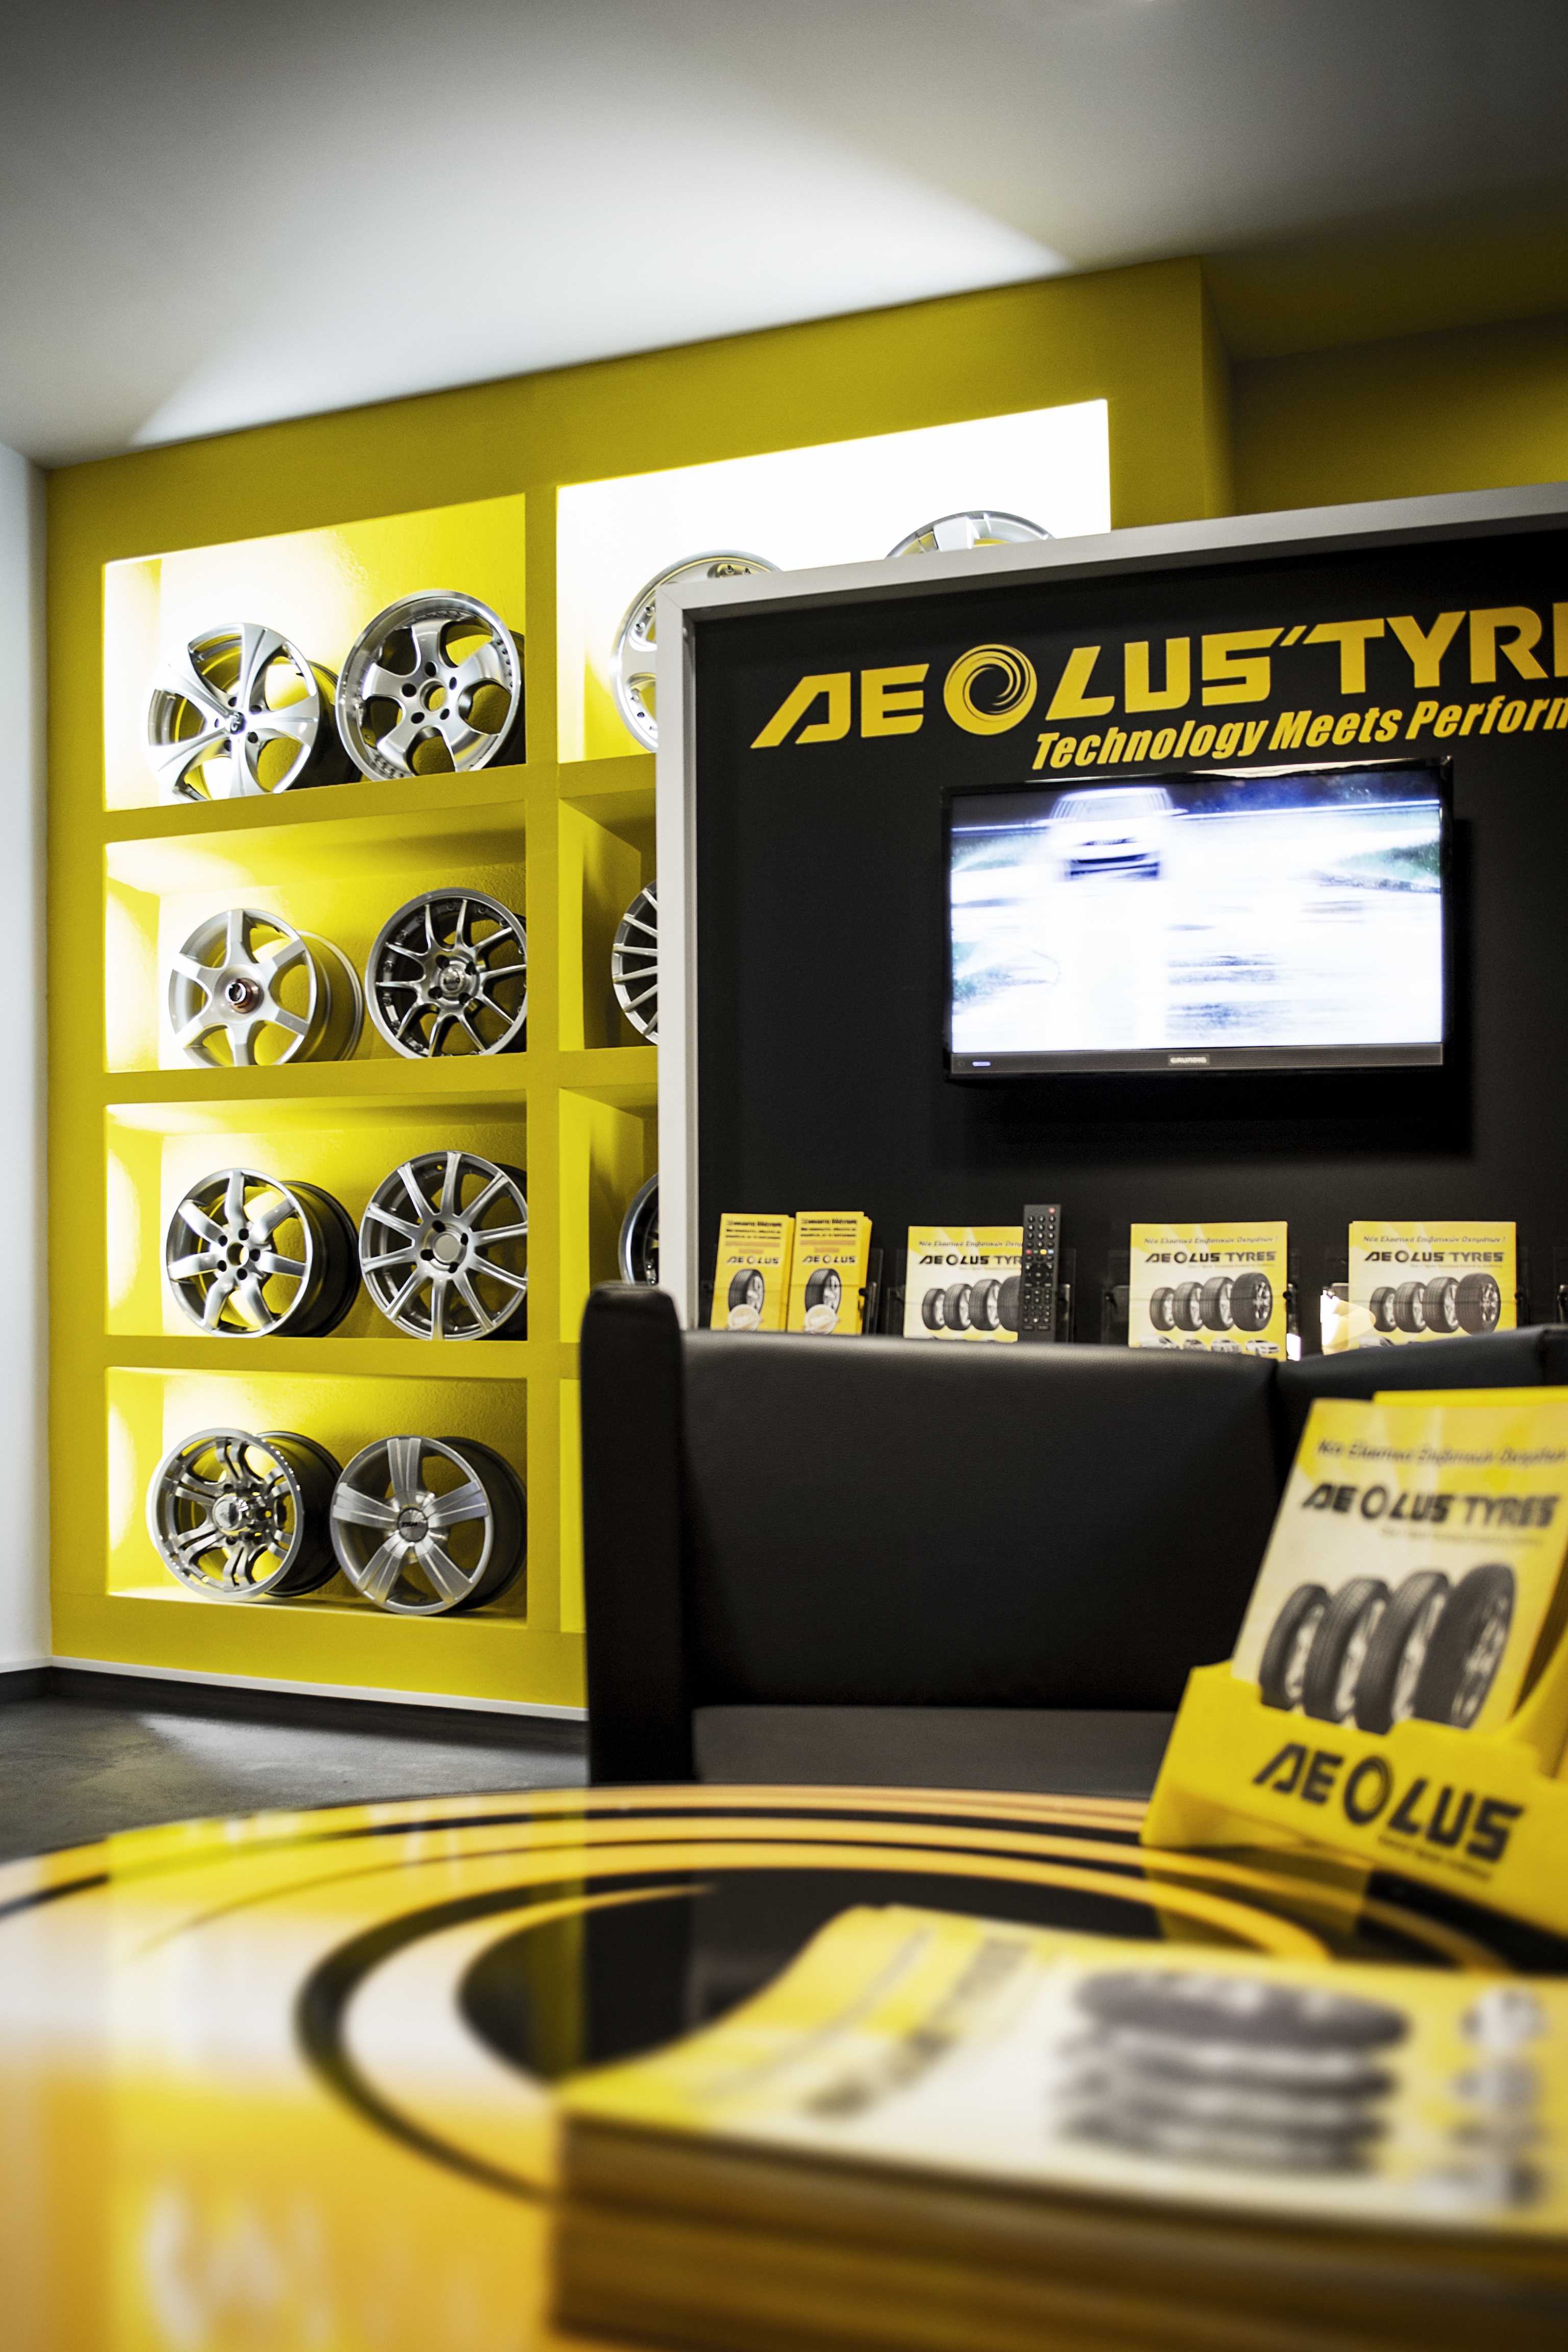 Aeolus branded store opens in Greece